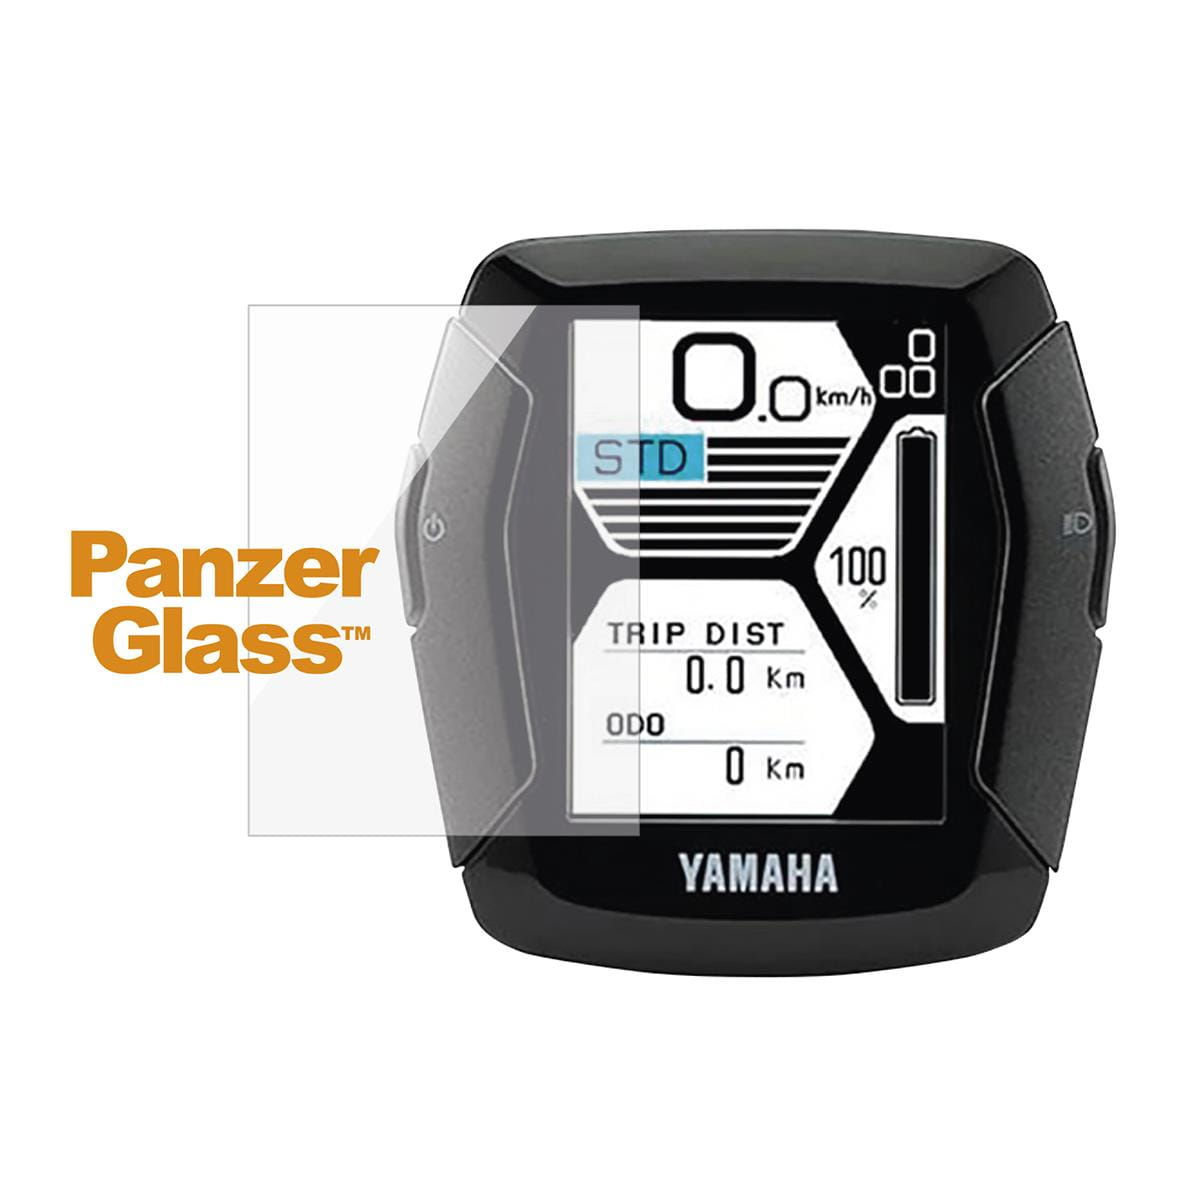 Panzerglass Yamaha Display C AG, Clear, Kontrolleinheiten, Bedienelemente  & Displays